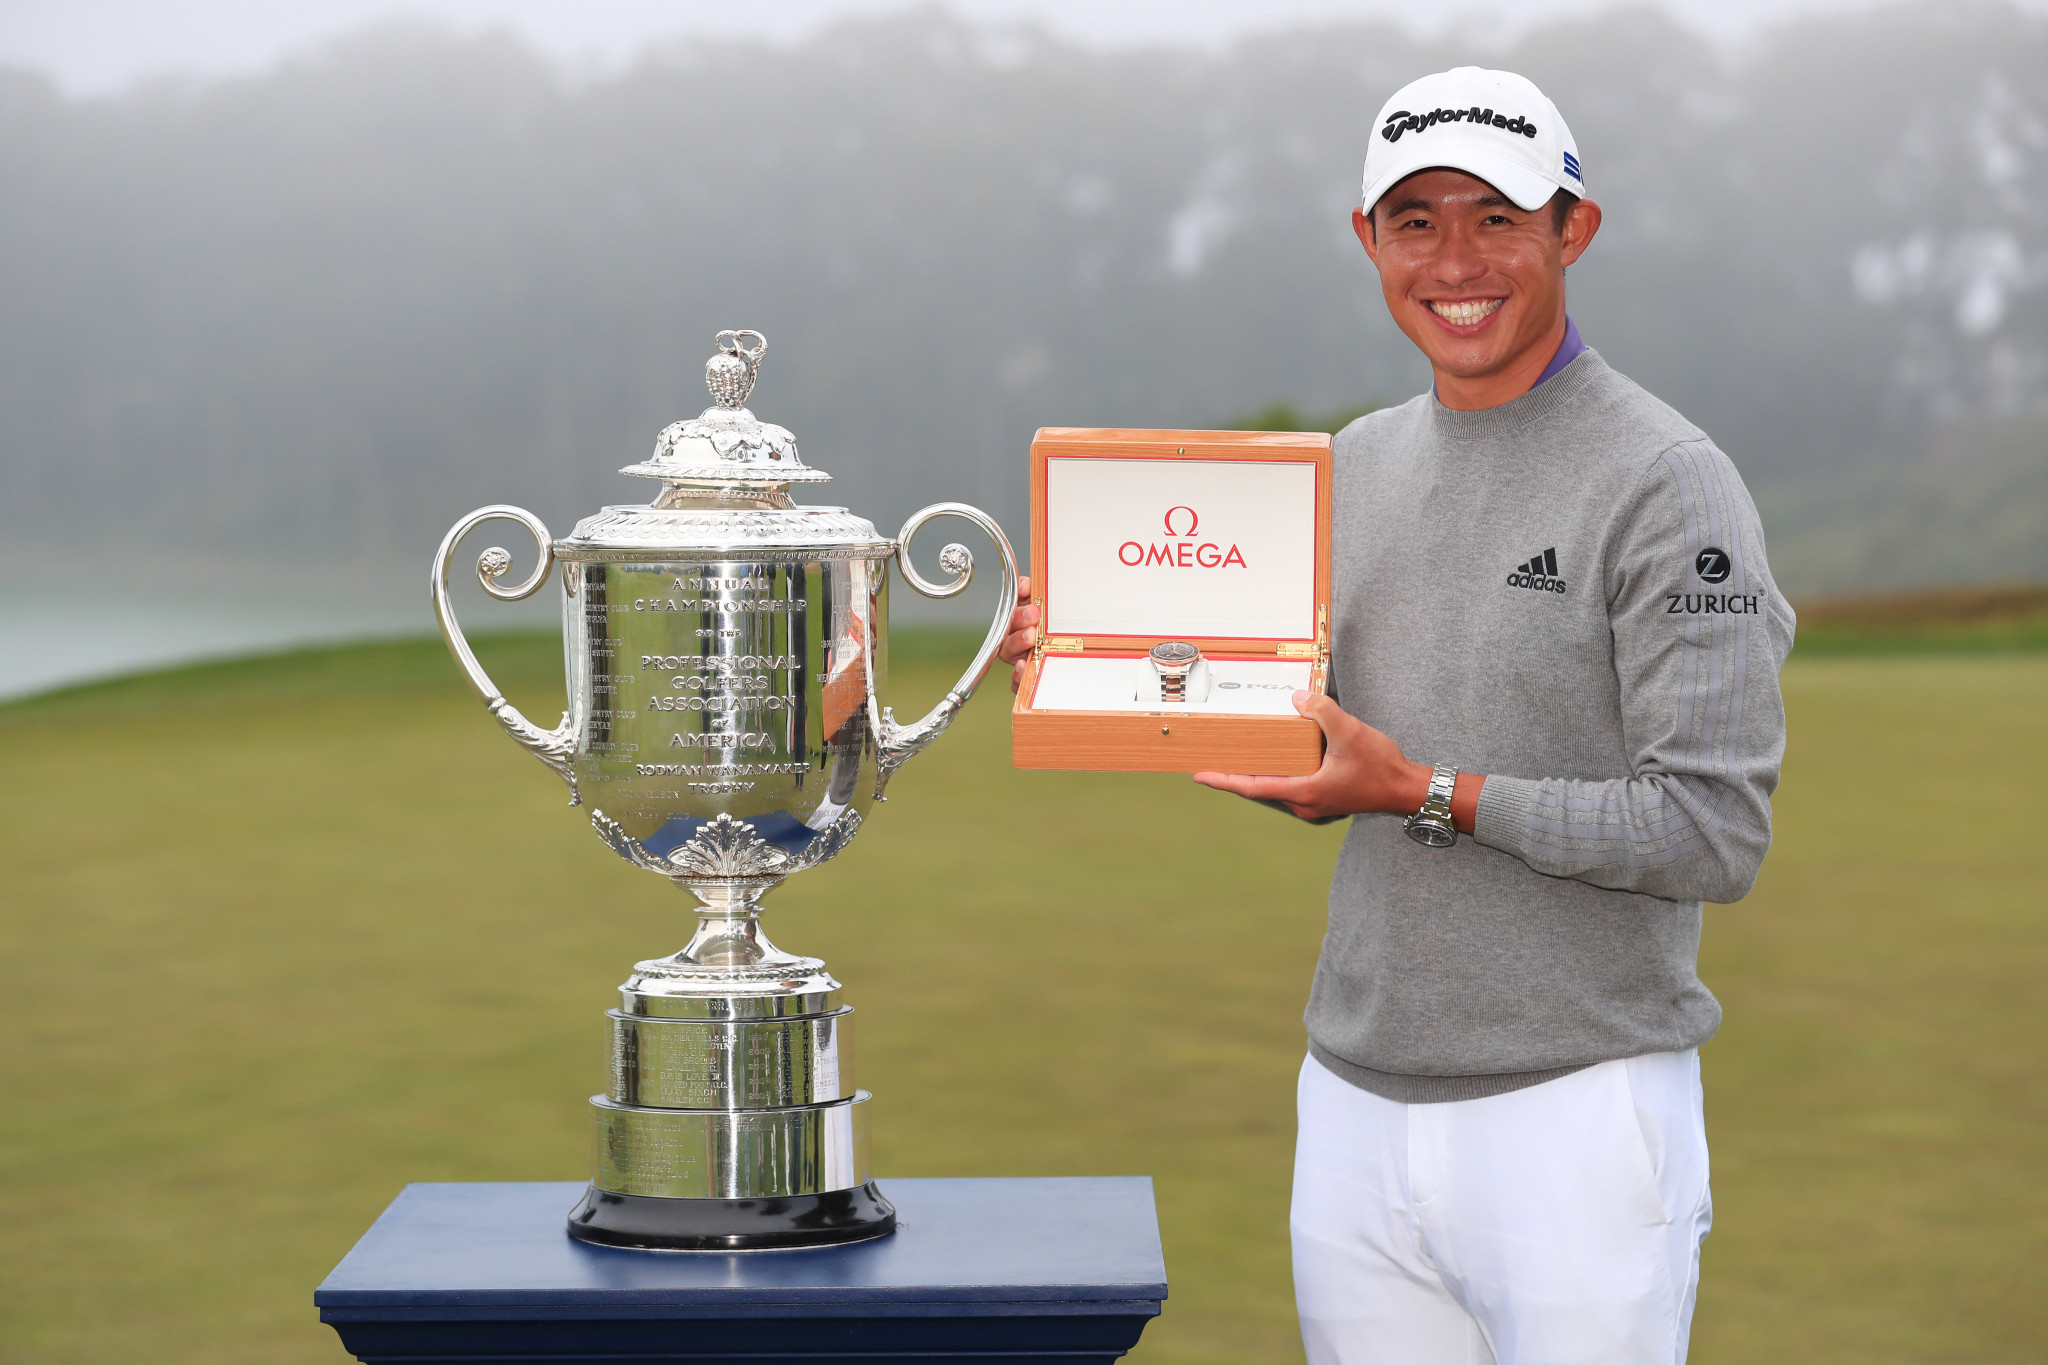 Morikawa wins PGA Championship to claim first major title